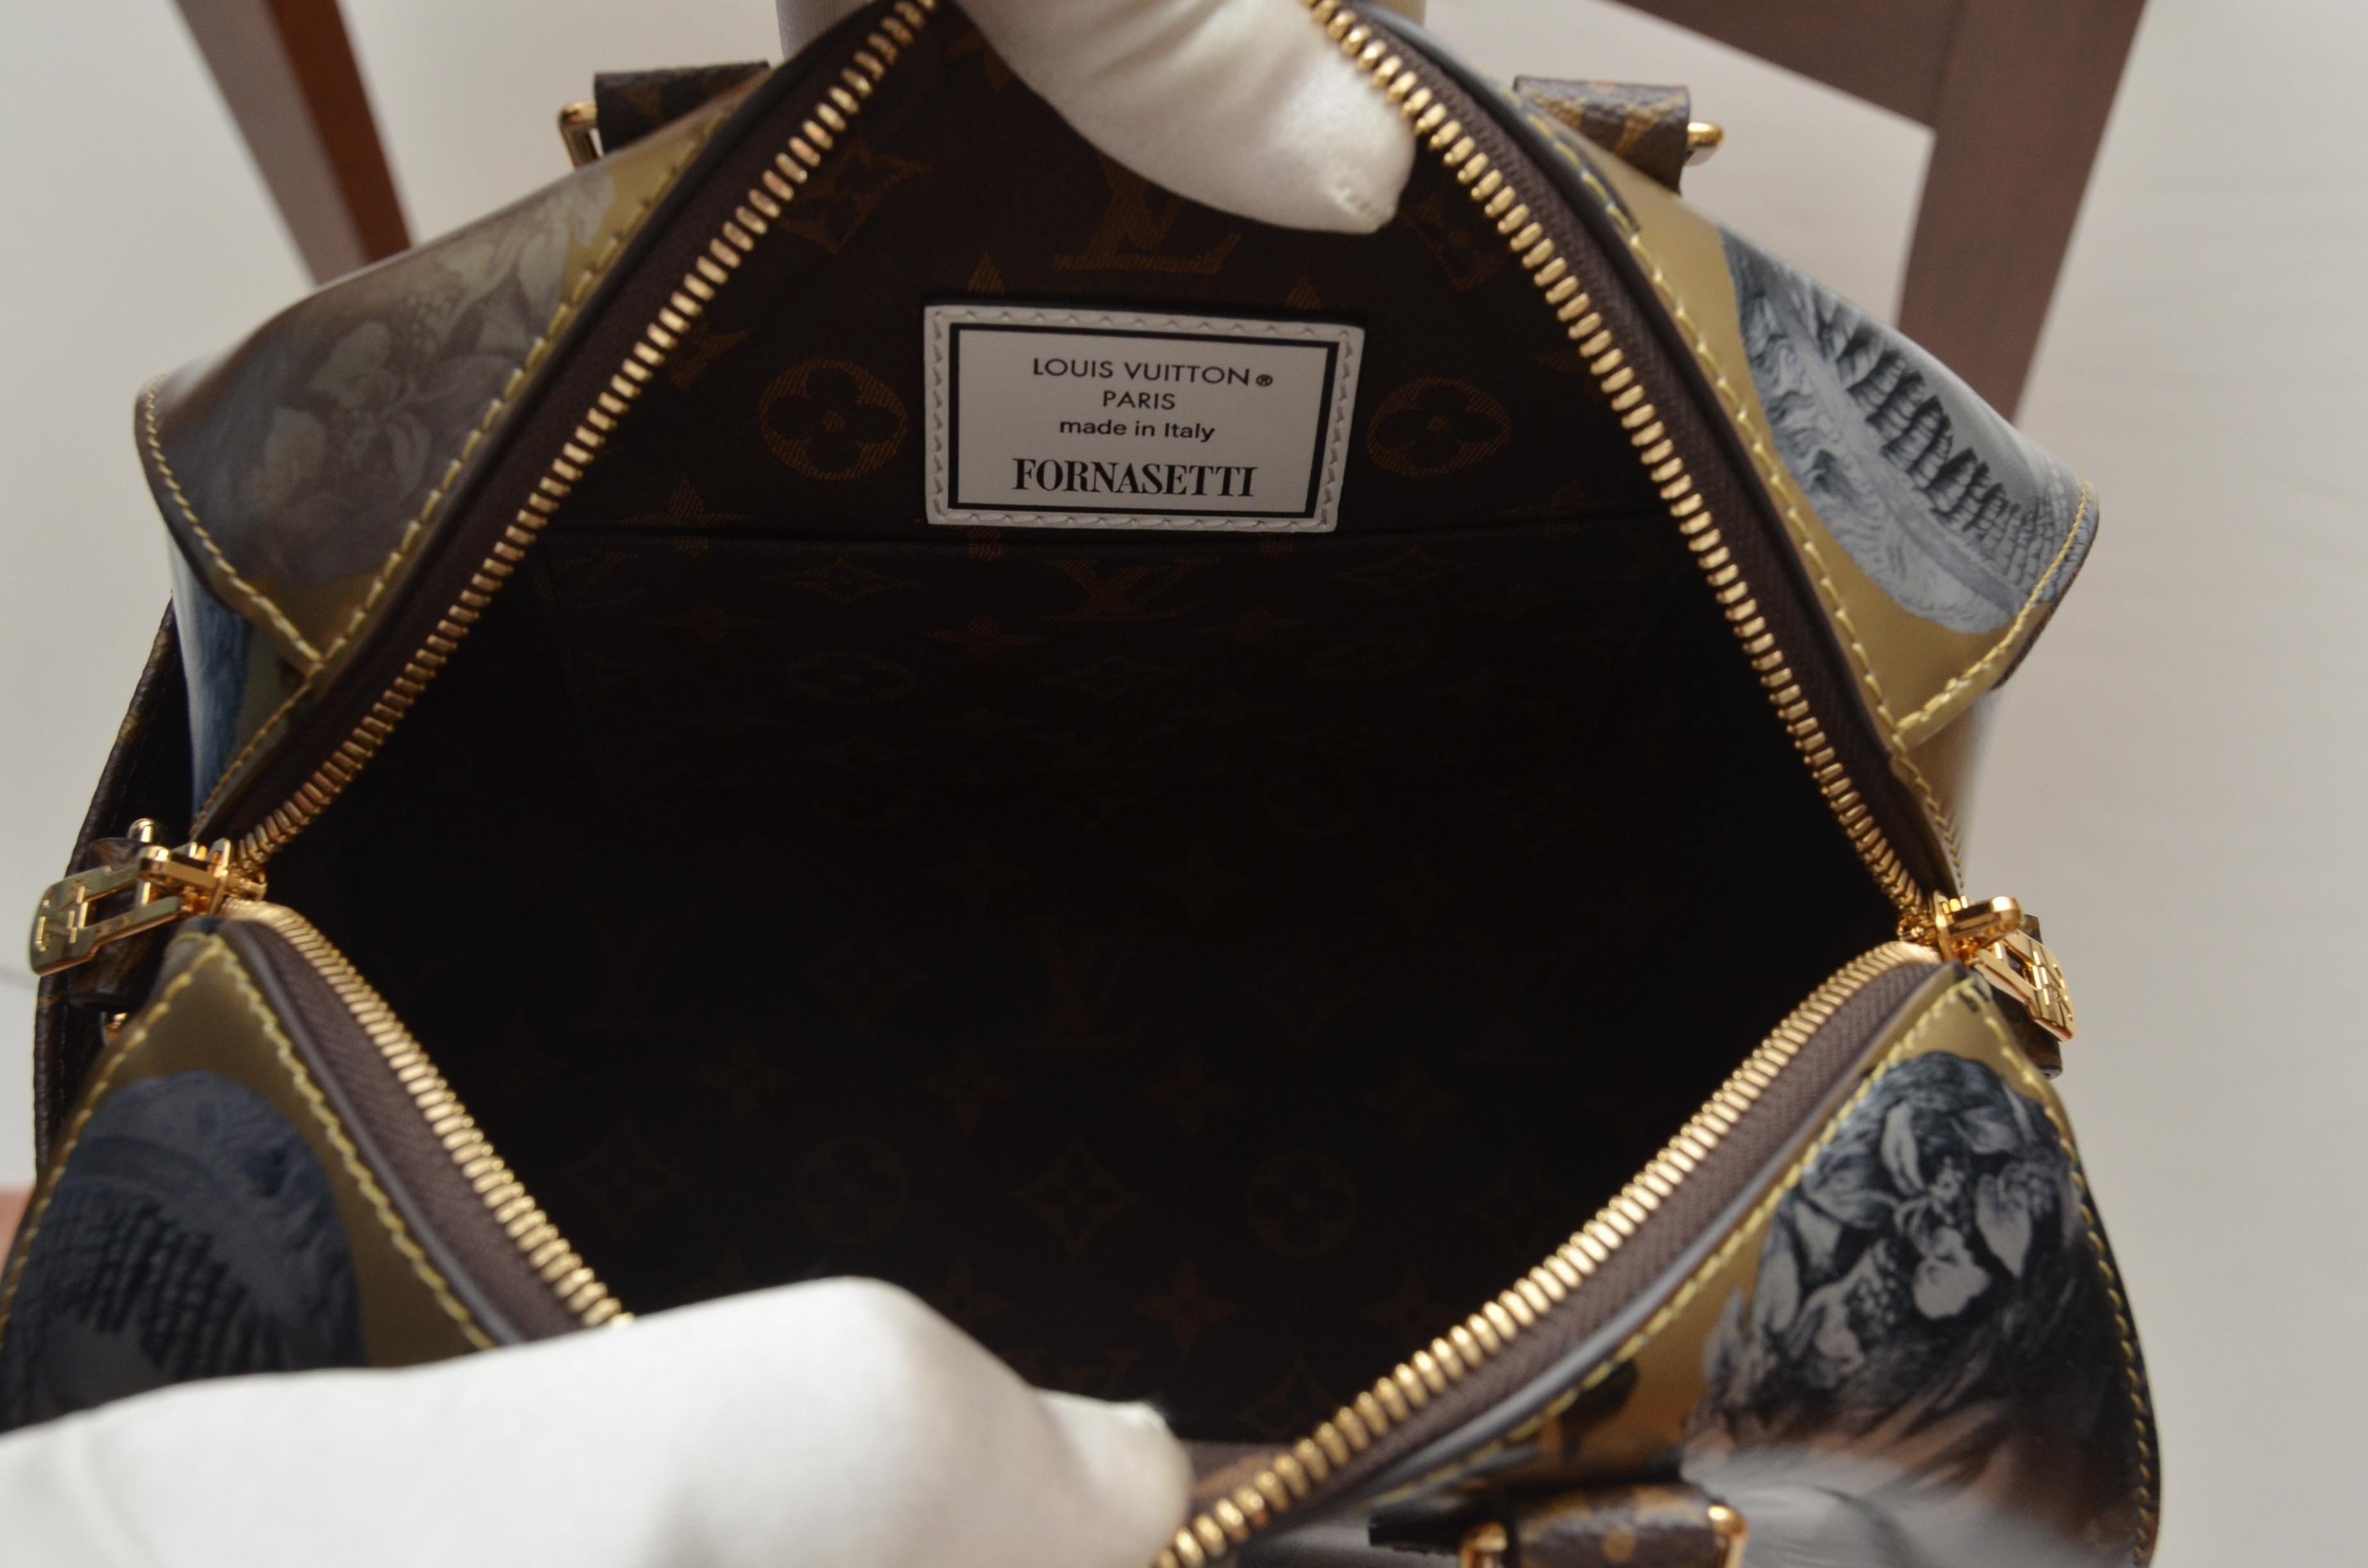 Women's or Men's Louis Vuitton Speedy 25 Fornasetti Gold Metallic Leather Bag Authentic LV New